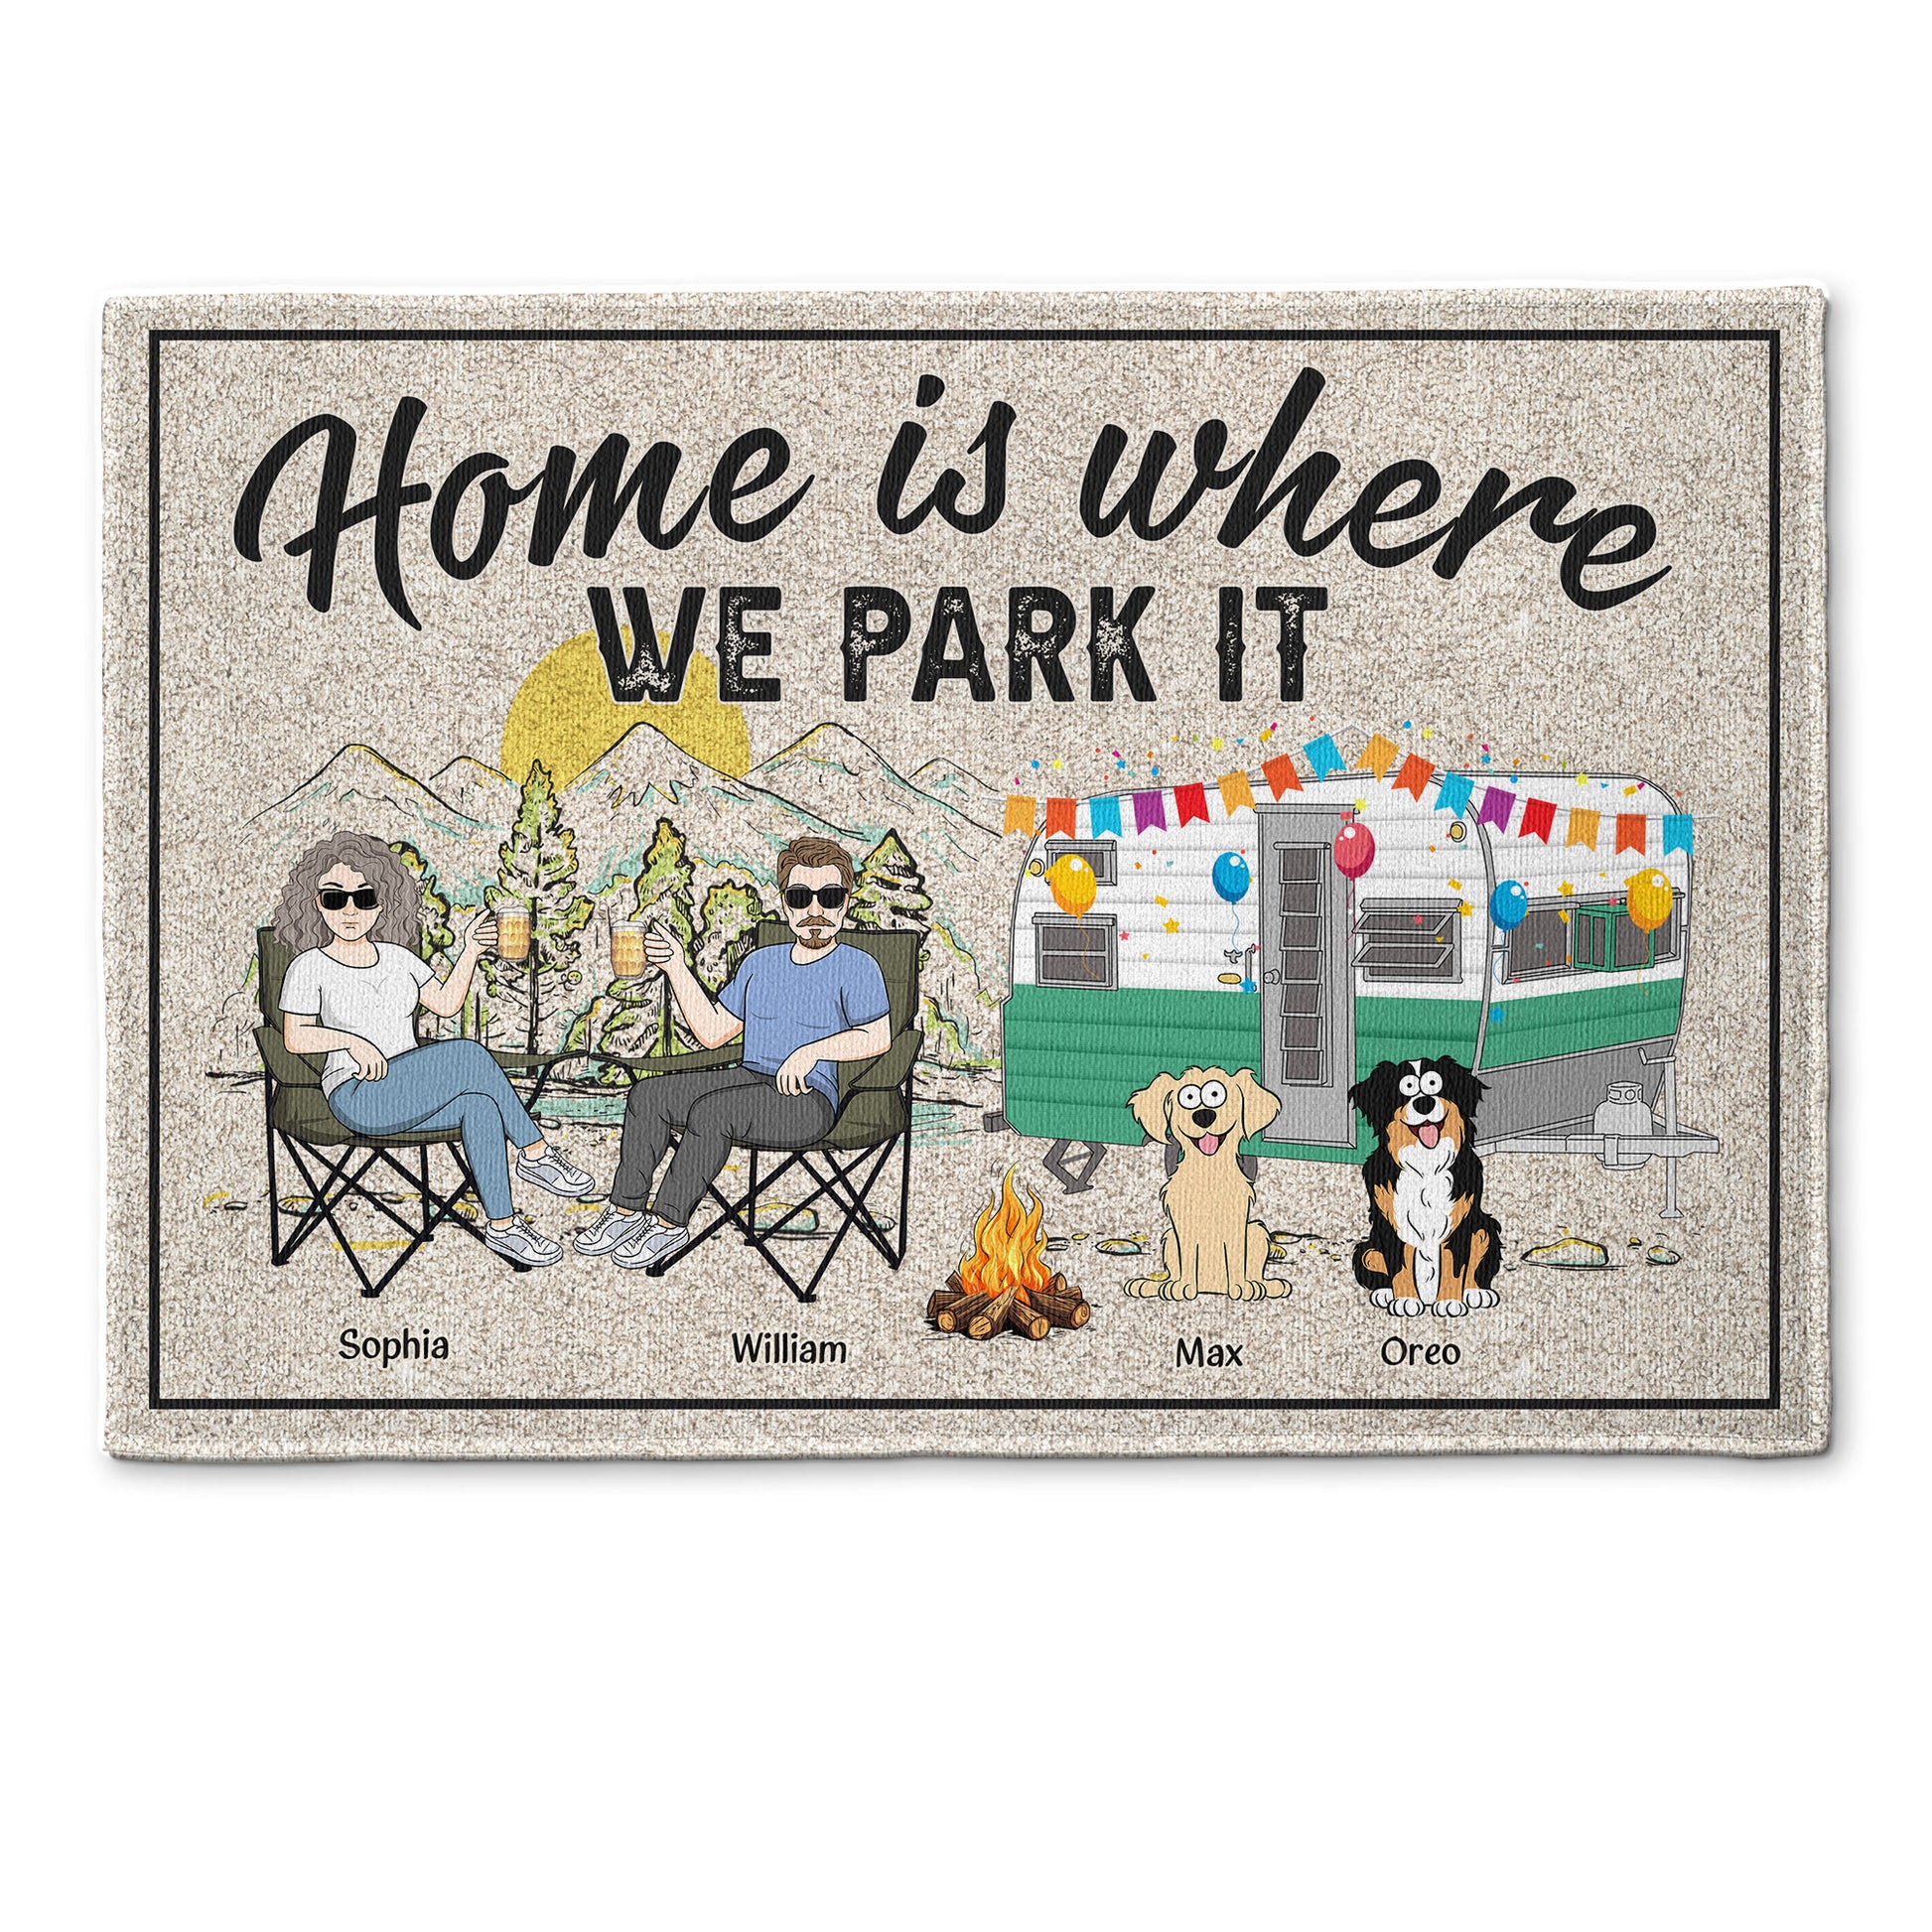 Home Is Where You Park It Doormat, Camping Gift K228 HN590 — GeckoCustom